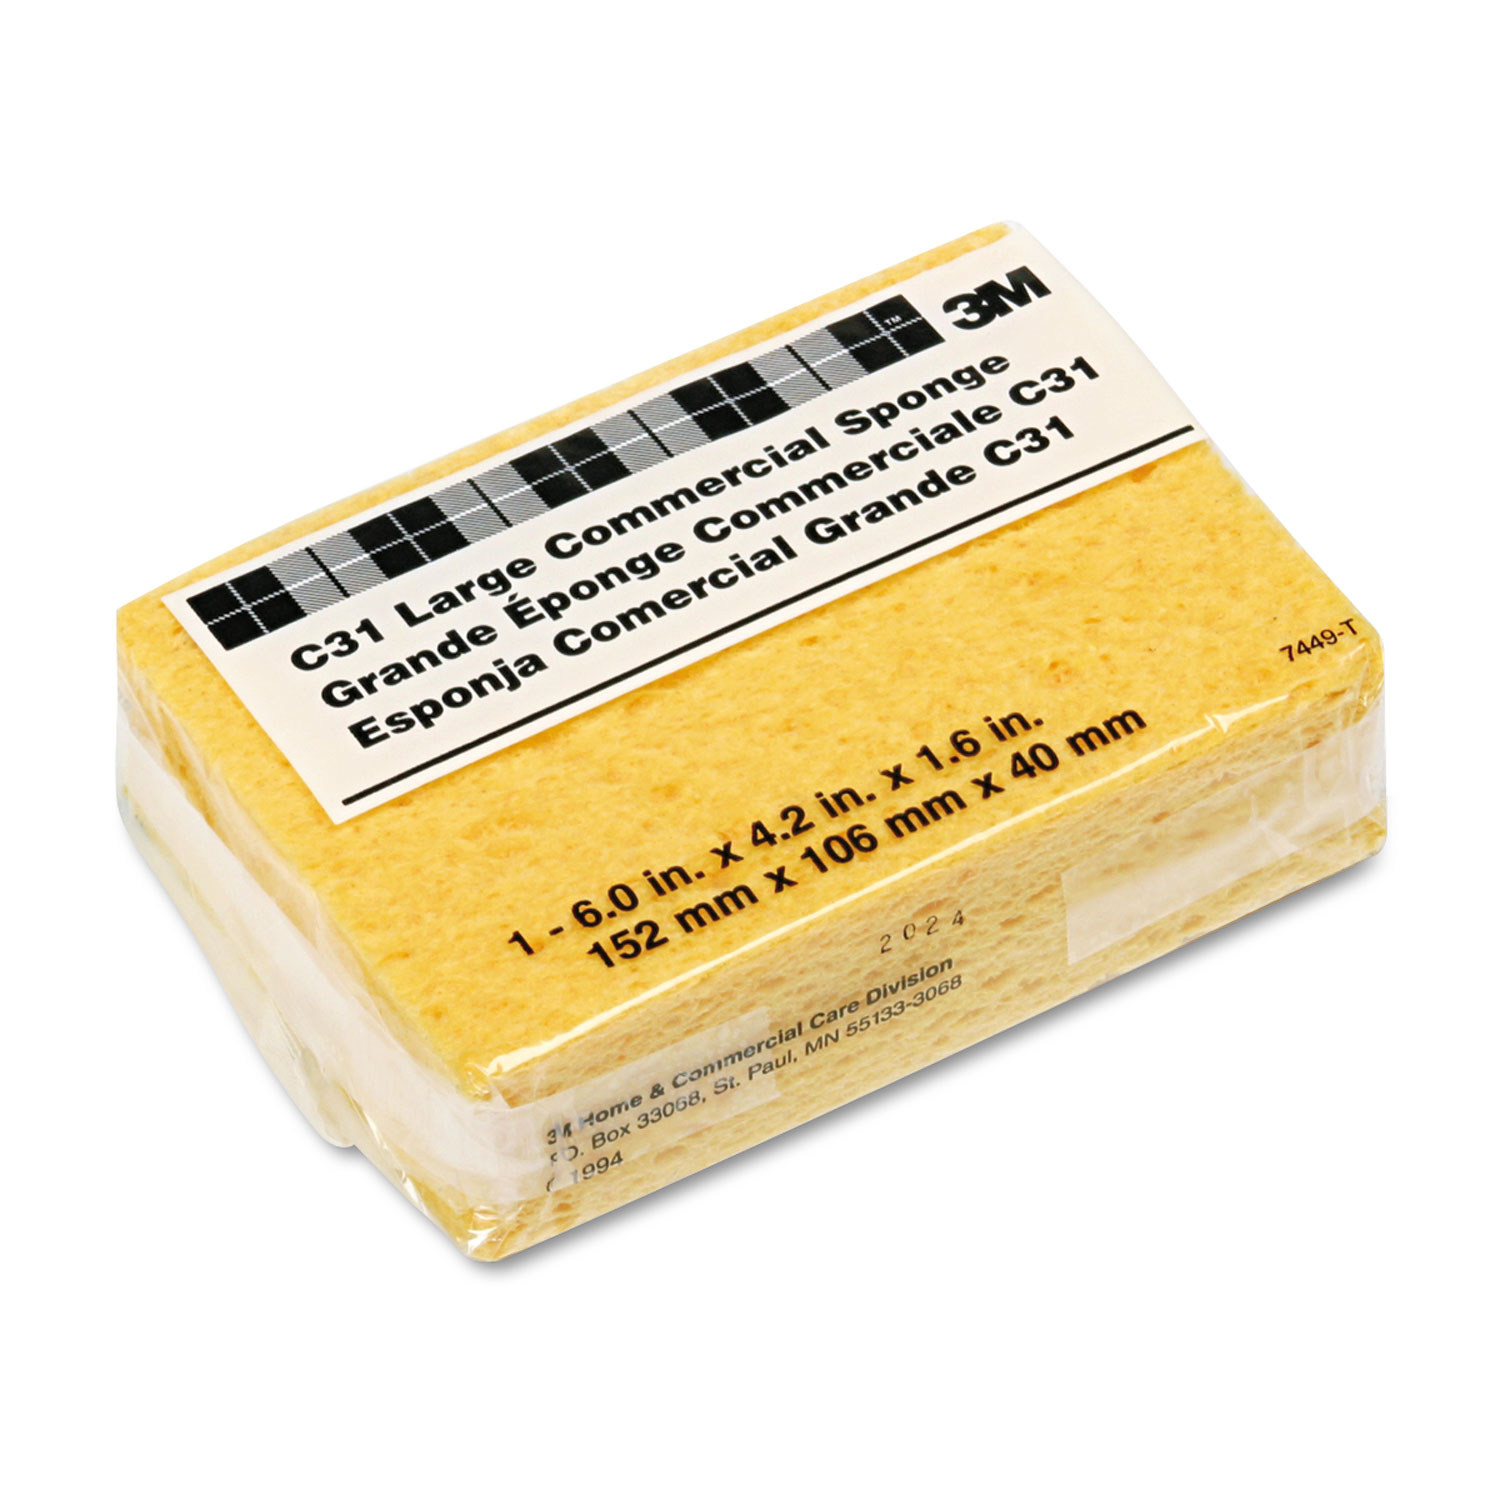  3M C31 Commercial Cellulose Sponge, Yellow, 4 1/4 x 6 (MMMC31) 